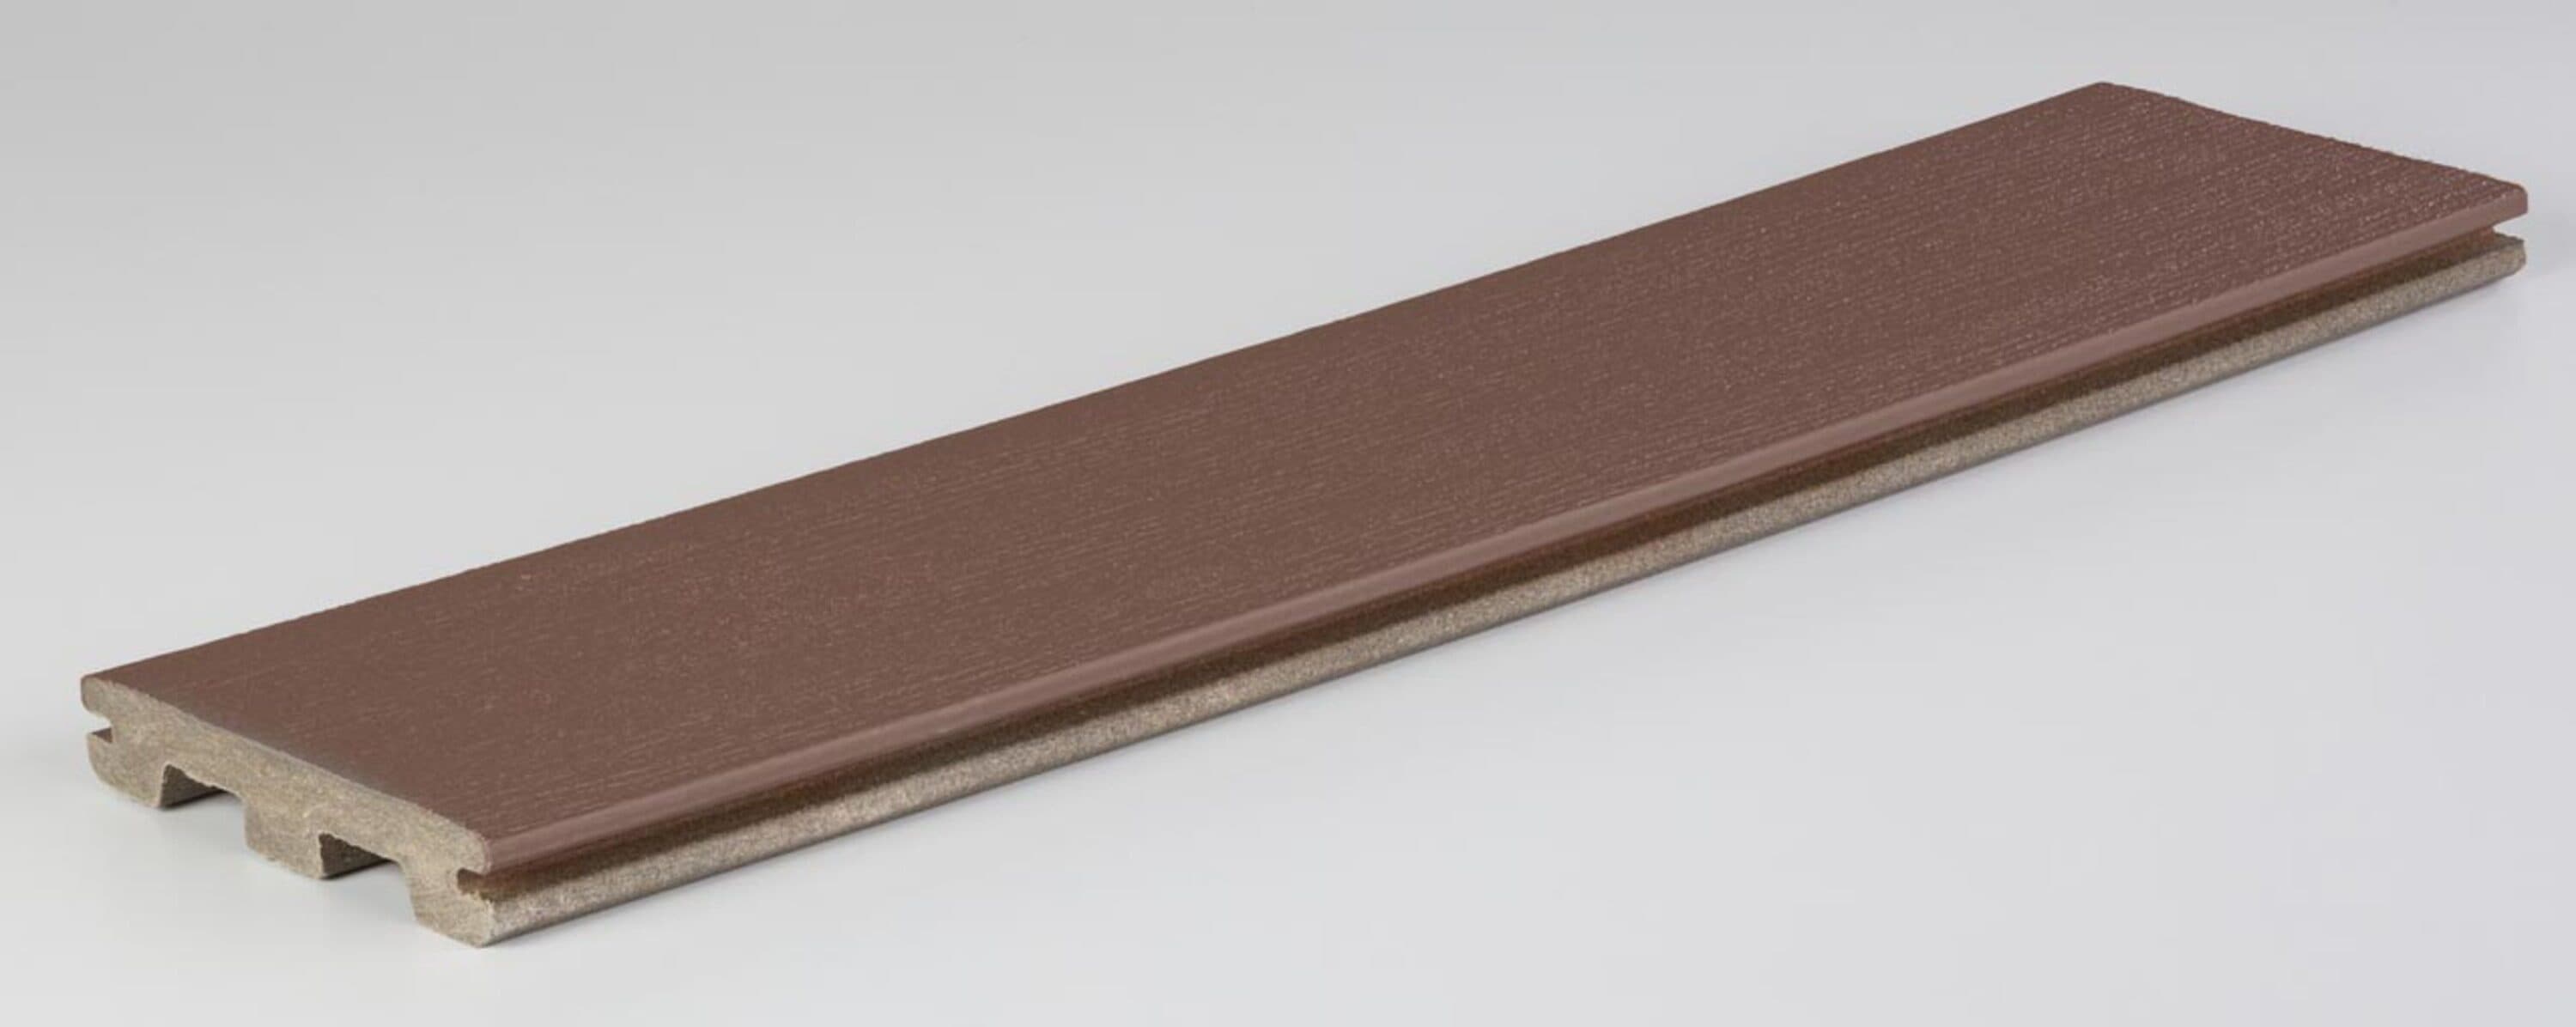 Prime 5/4-in x 6-in x 16-ft Dark Teak Grooved Composite Deck Board in Brown | - TimberTech ESGV5416DT